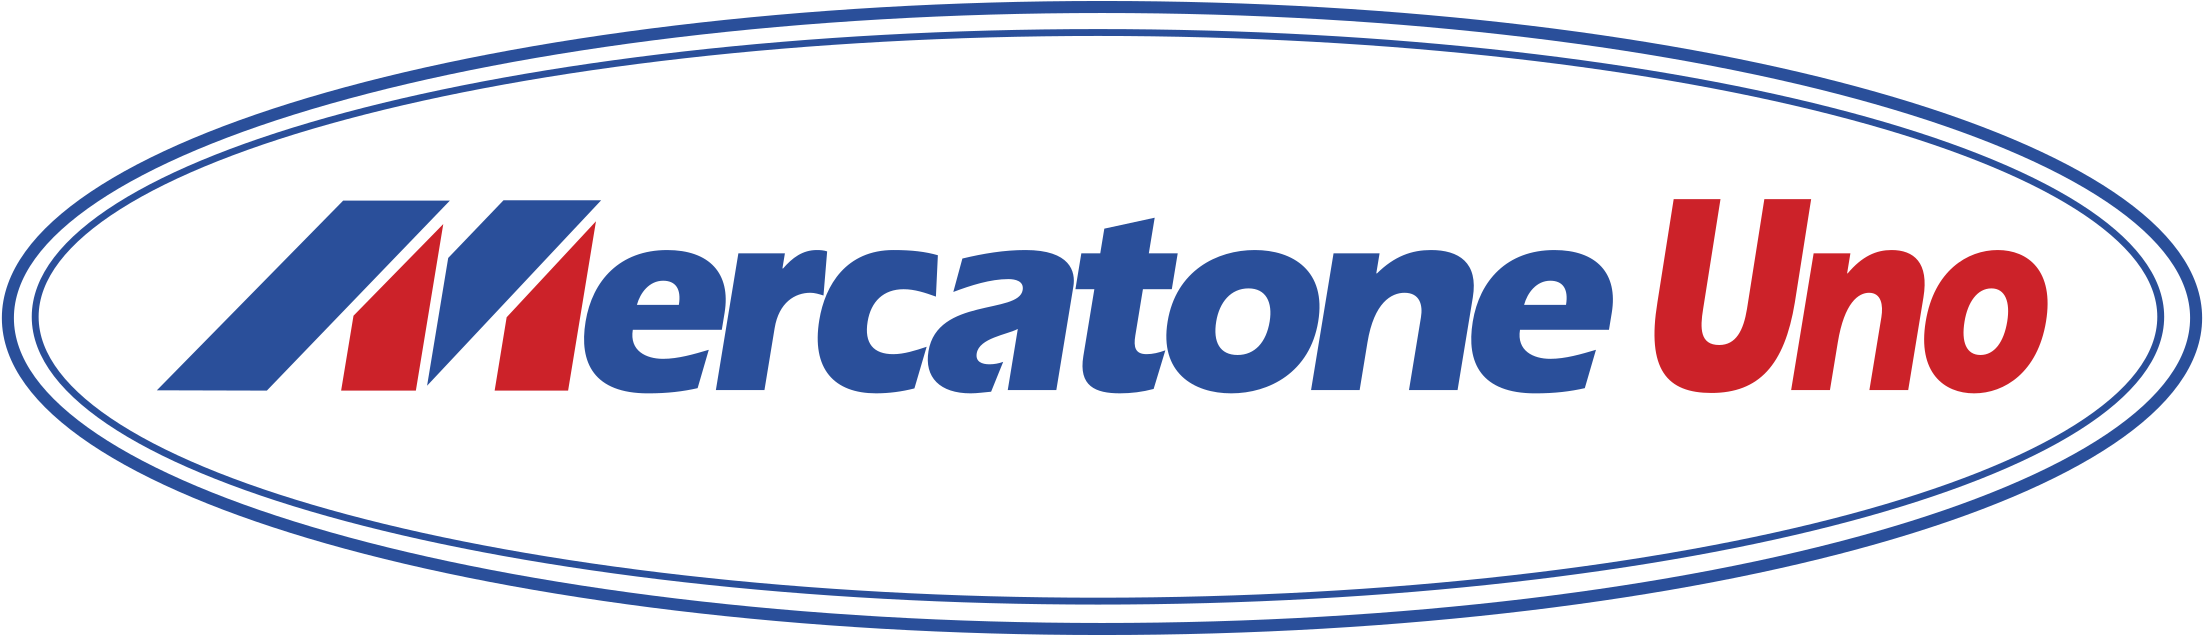 Mercatone Uno Logo Png Transparent - Mercatone Uno (2400x2400), Png Download